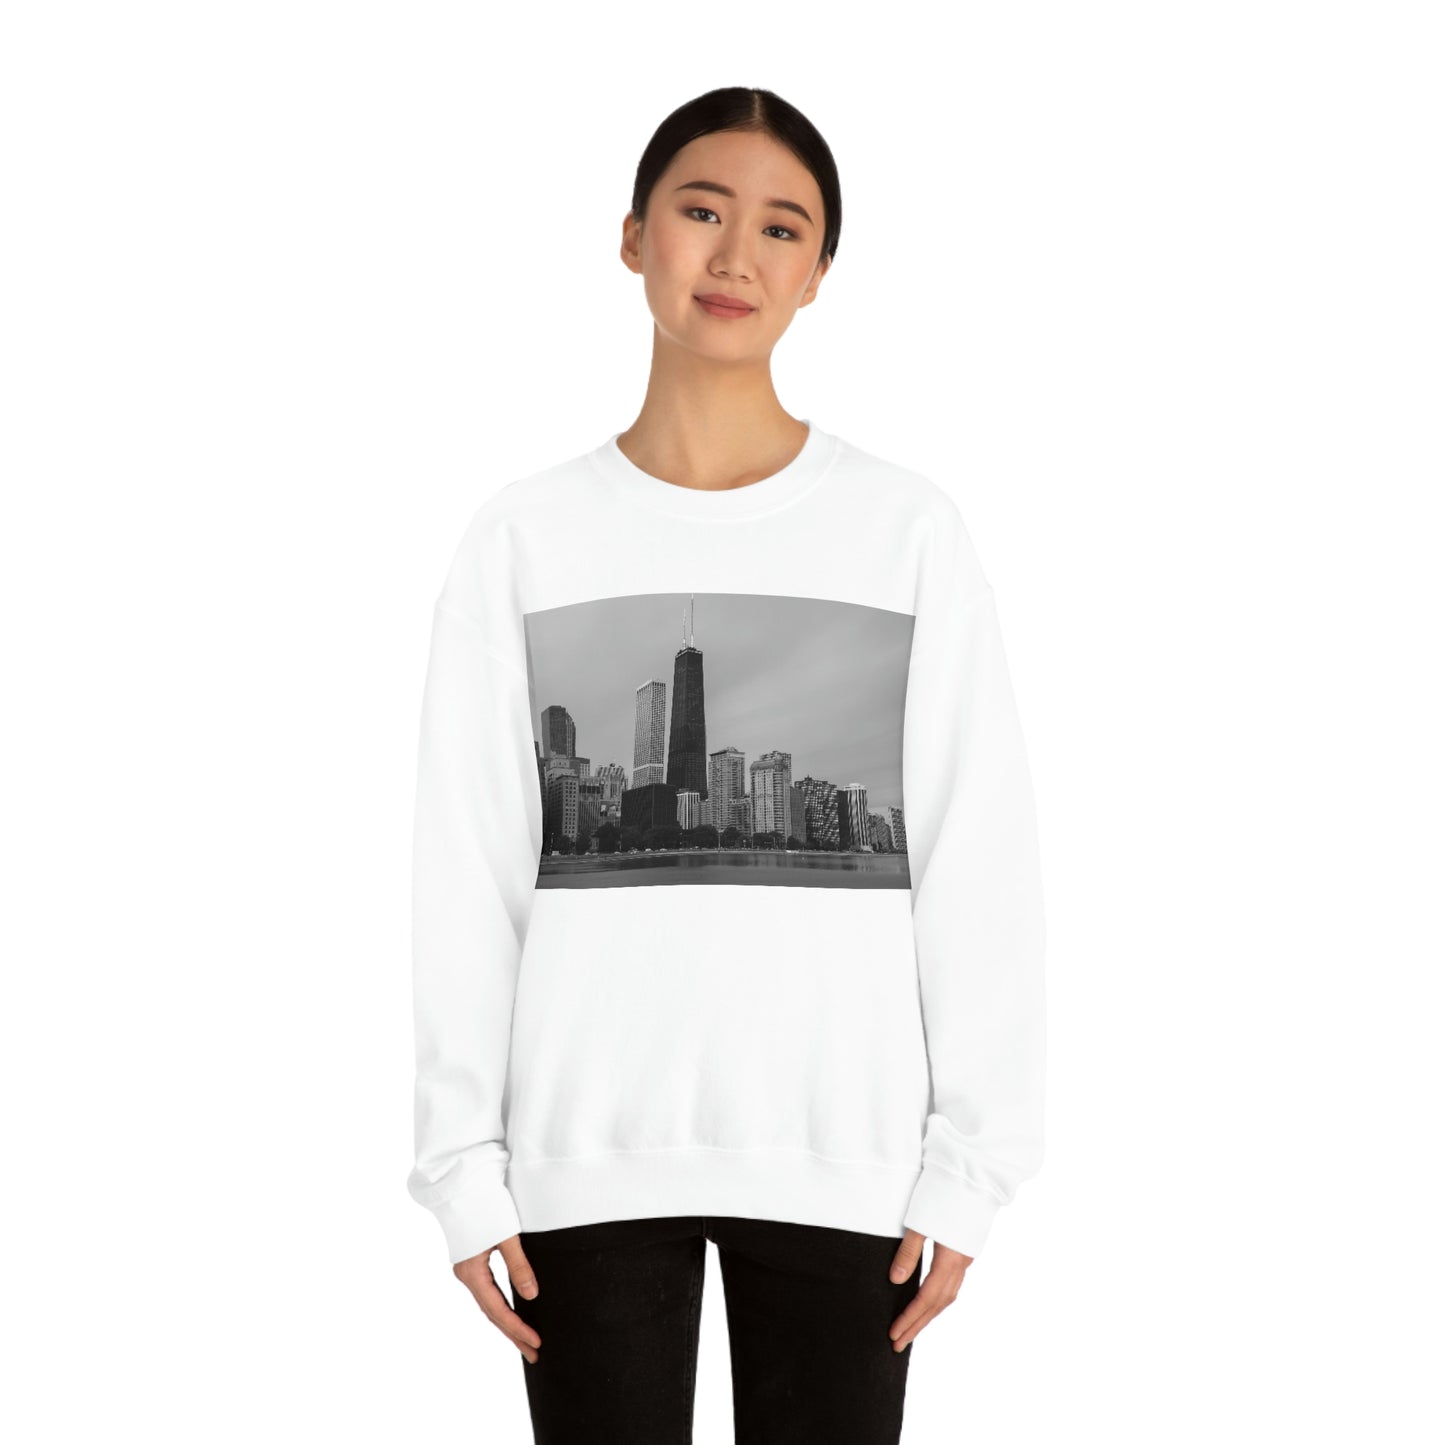 Chicago Sweatshirt